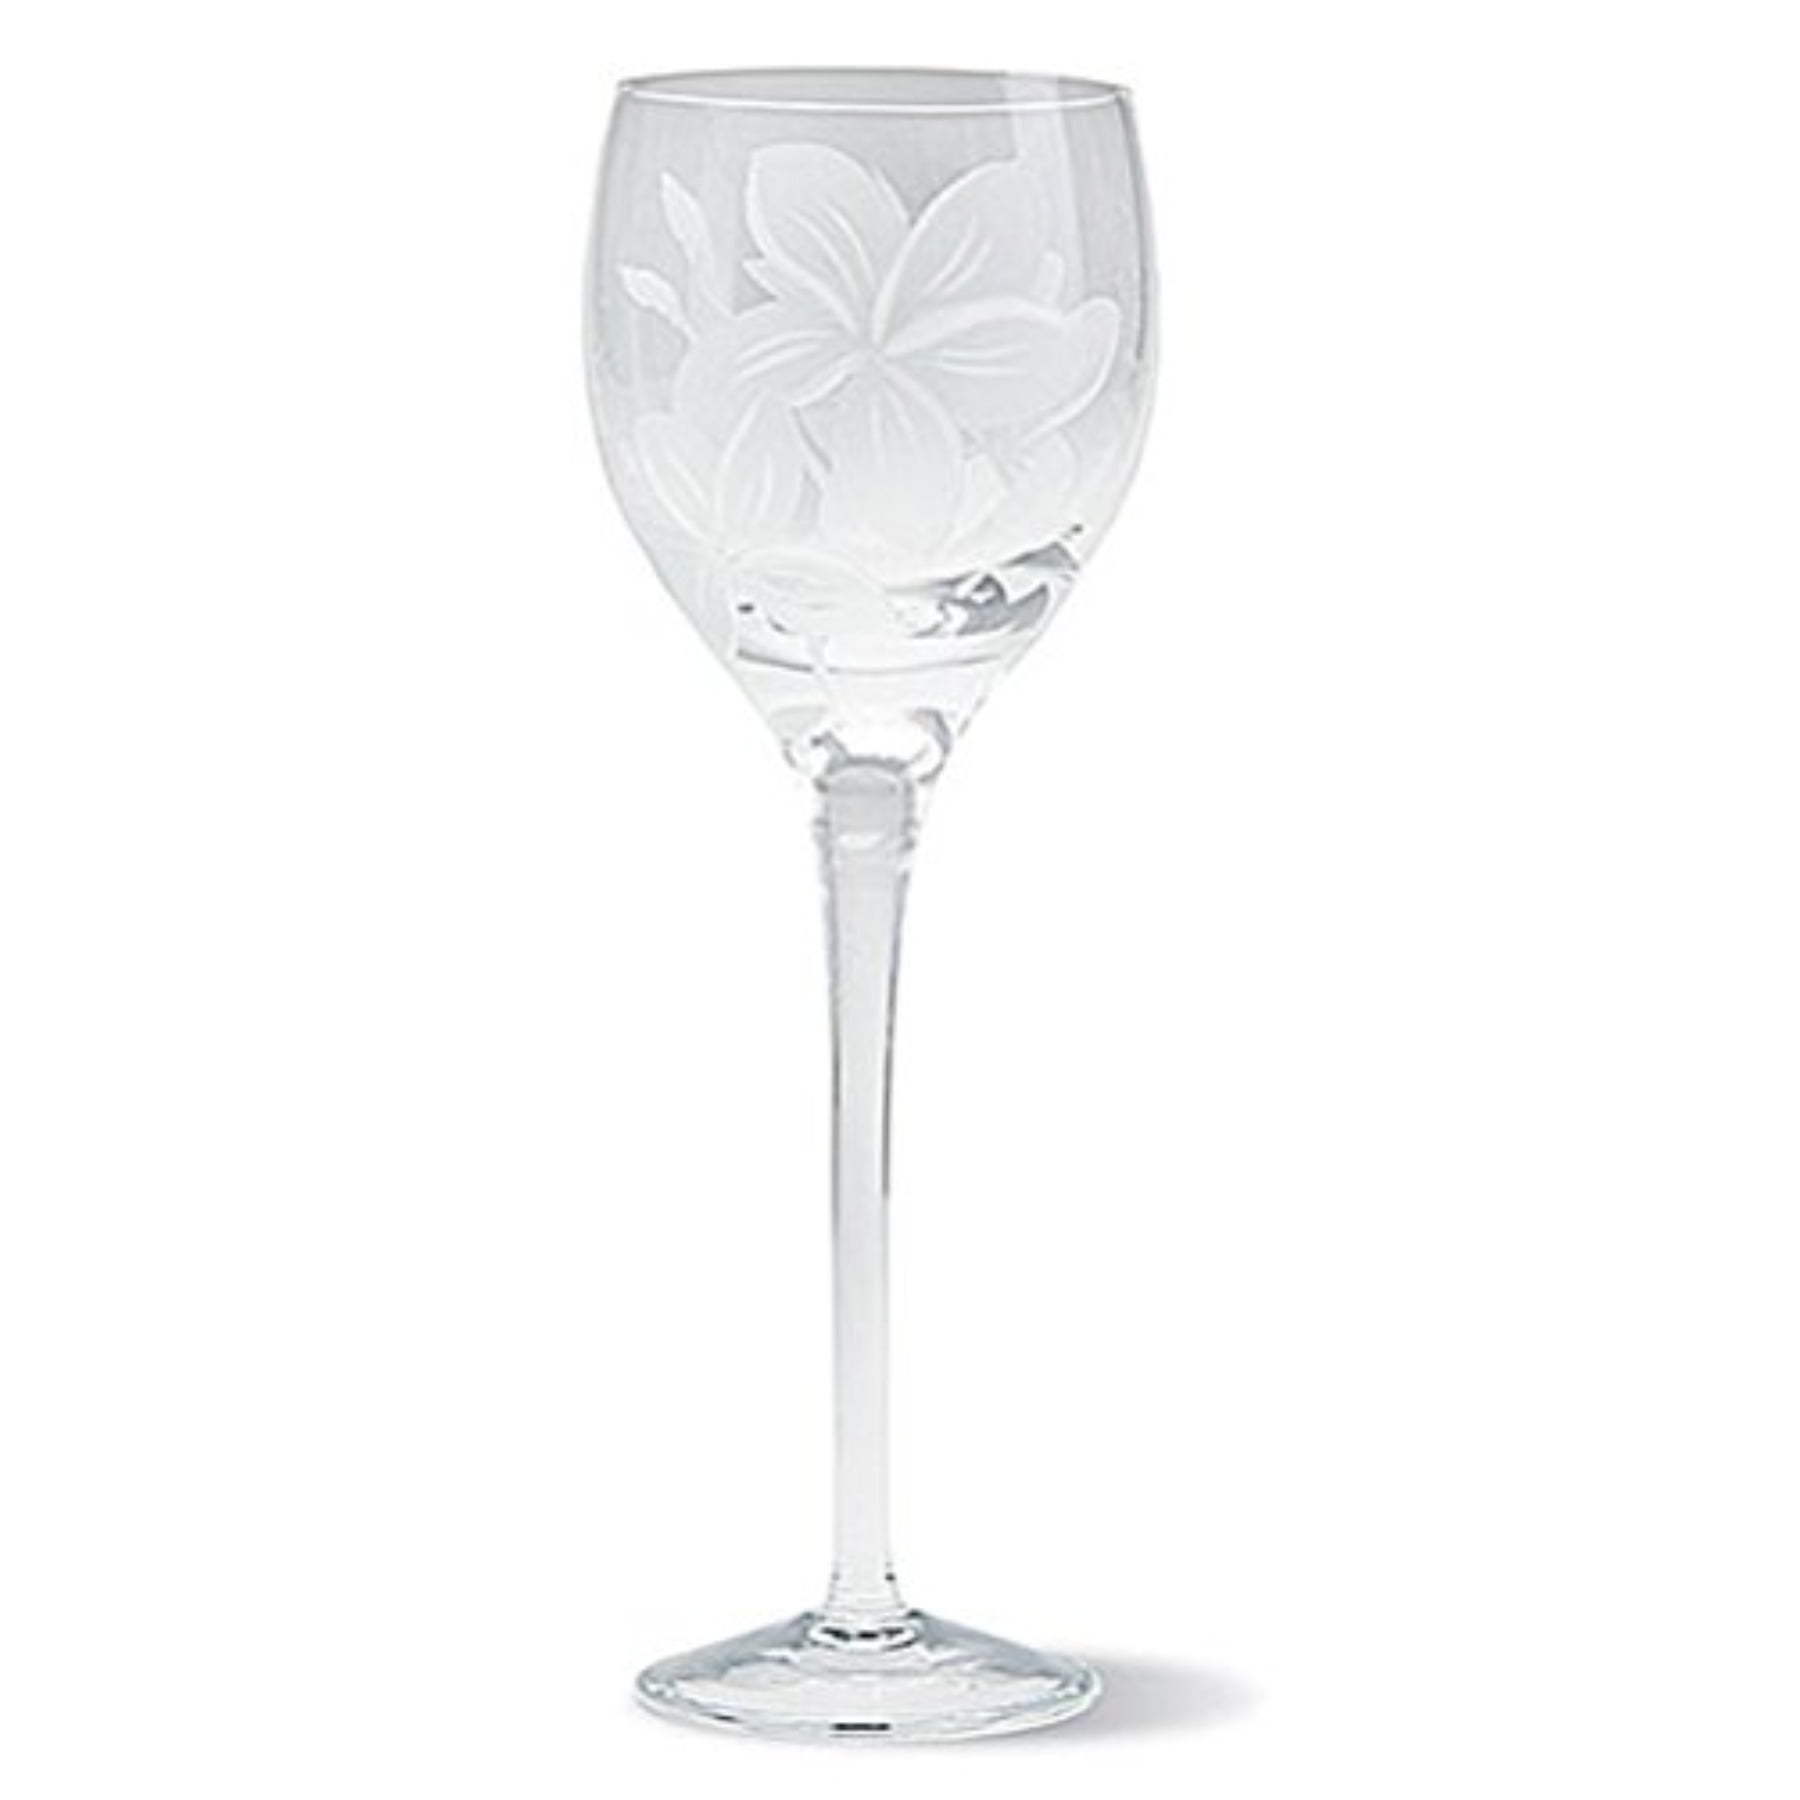 Etched Stemless Wine Glass, Plumeria